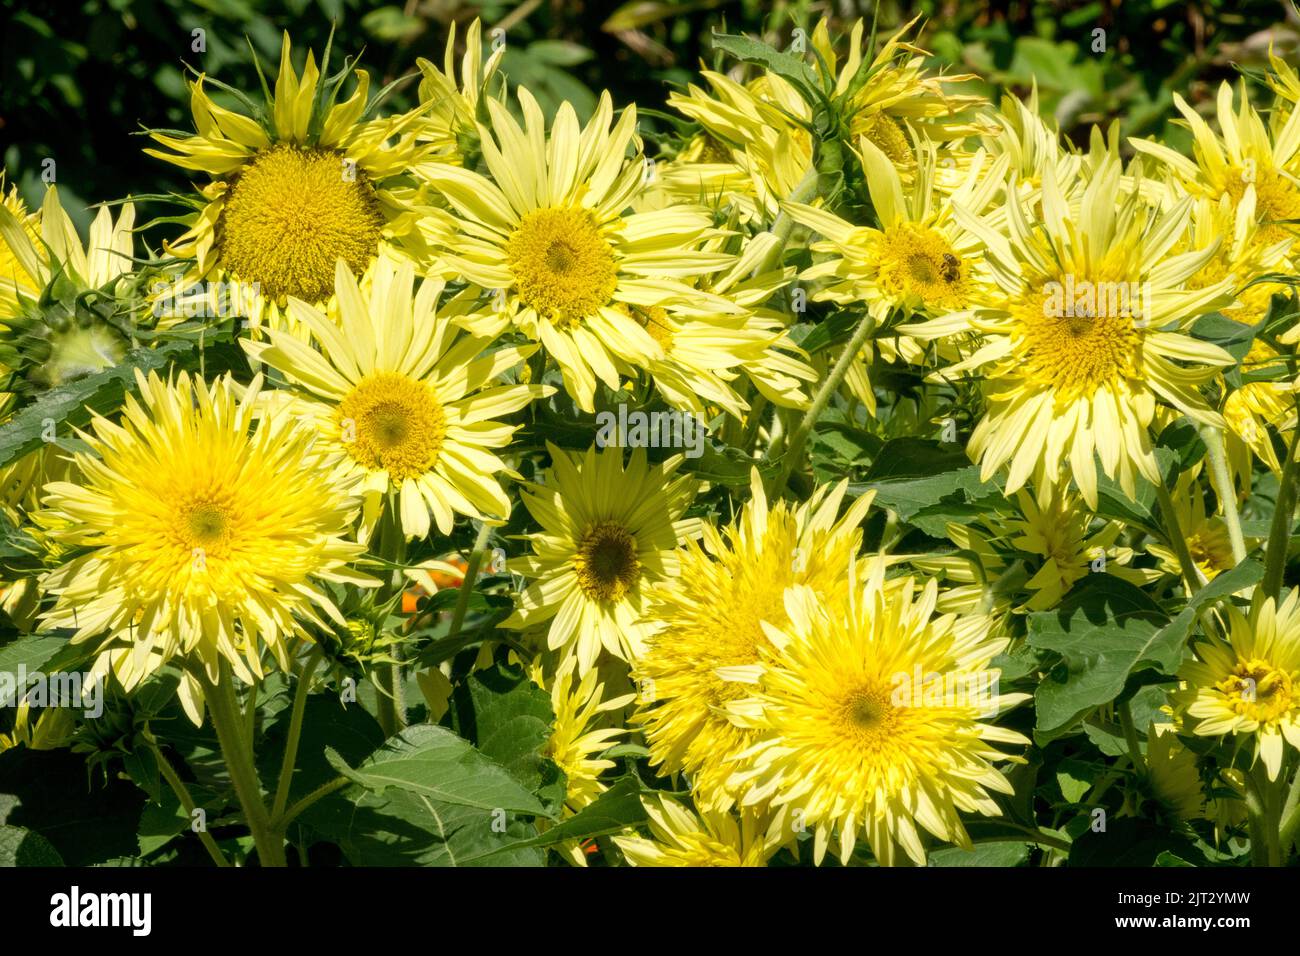 Herbaceous Garden Sunflowers, Helianthus annuus 'Lemon Cutie' dwarf variety unusual semi-double, lemon-coloured flowers Stock Photo